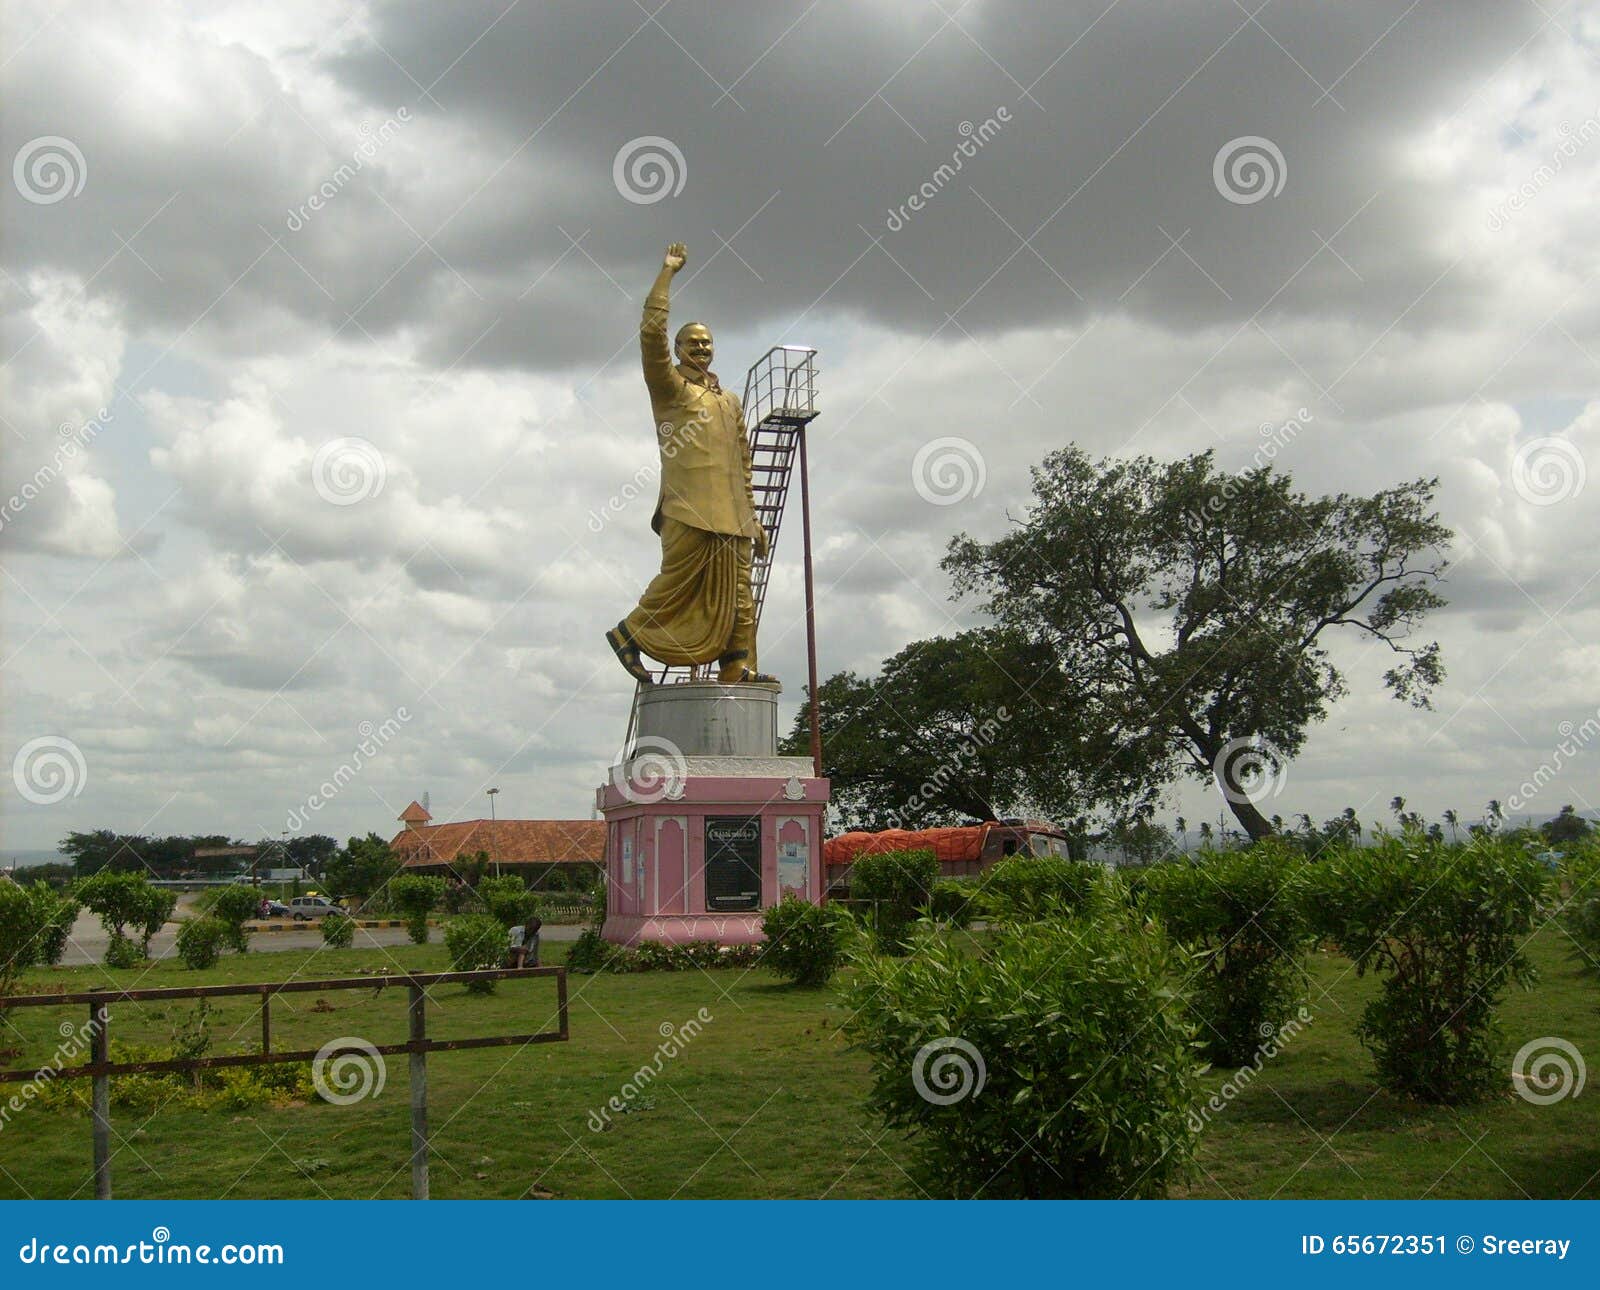 Ysr statue cudapah stock image. Image of india, congress - 65672351